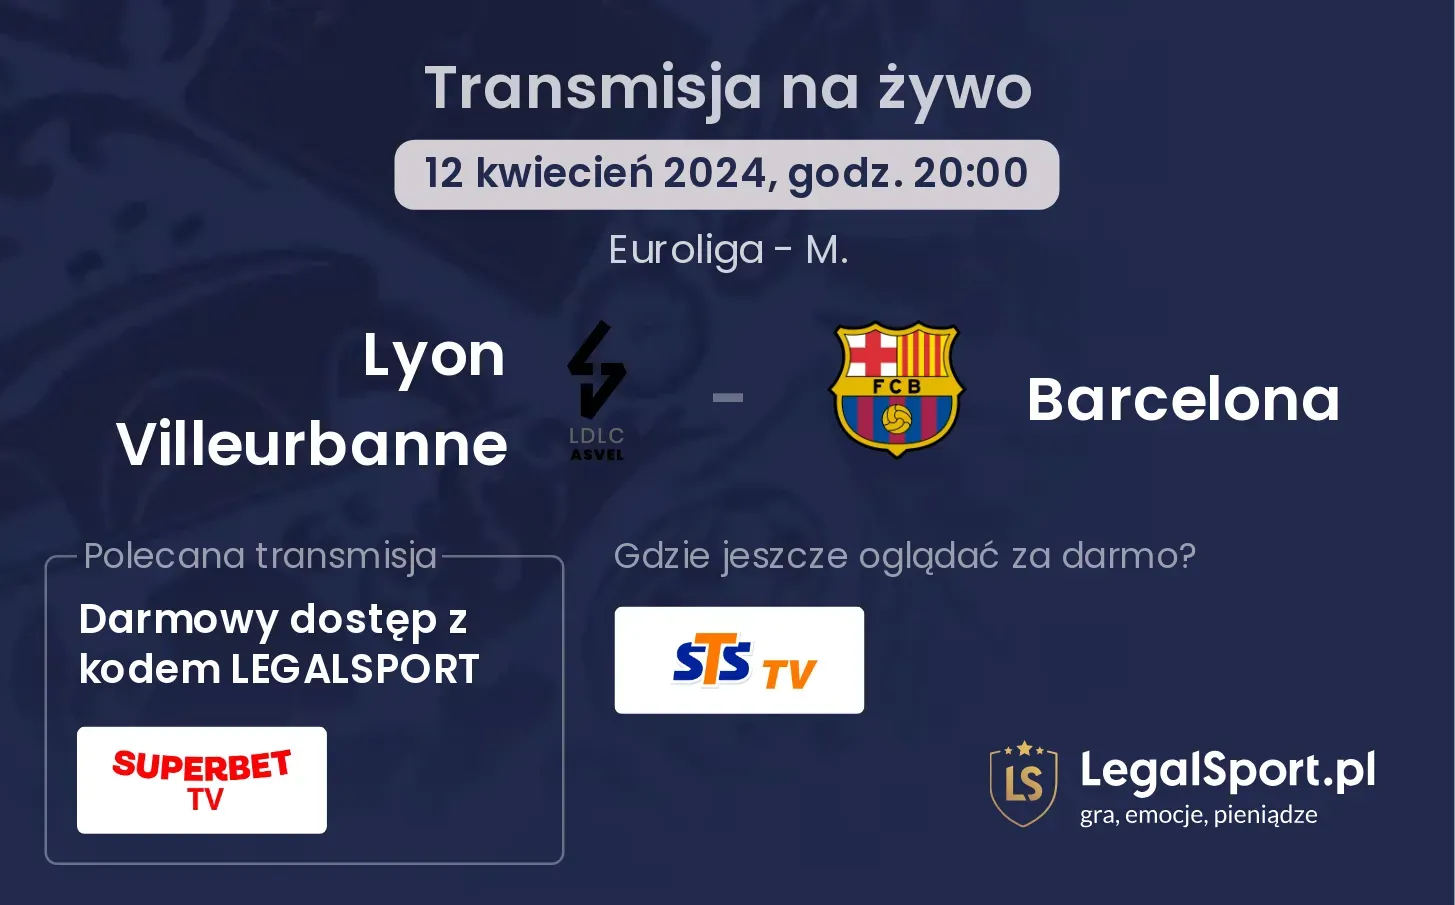 Lyon Villeurbanne - Barcelona transmisja na żywo